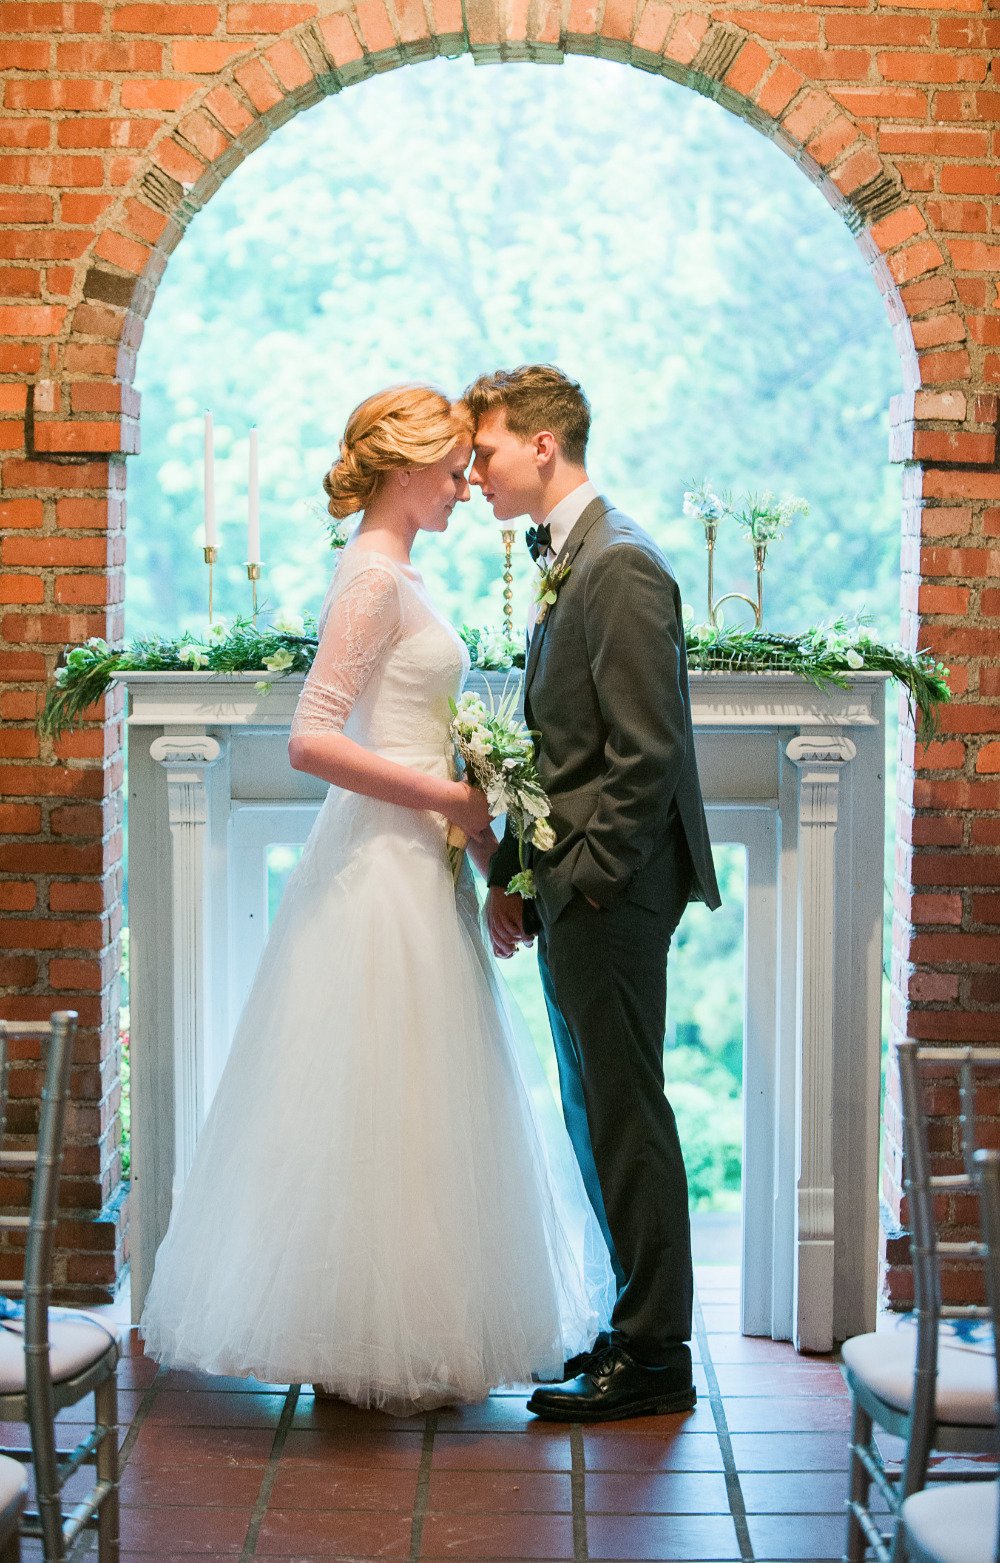 beautiful wedding ceremony with brick archway